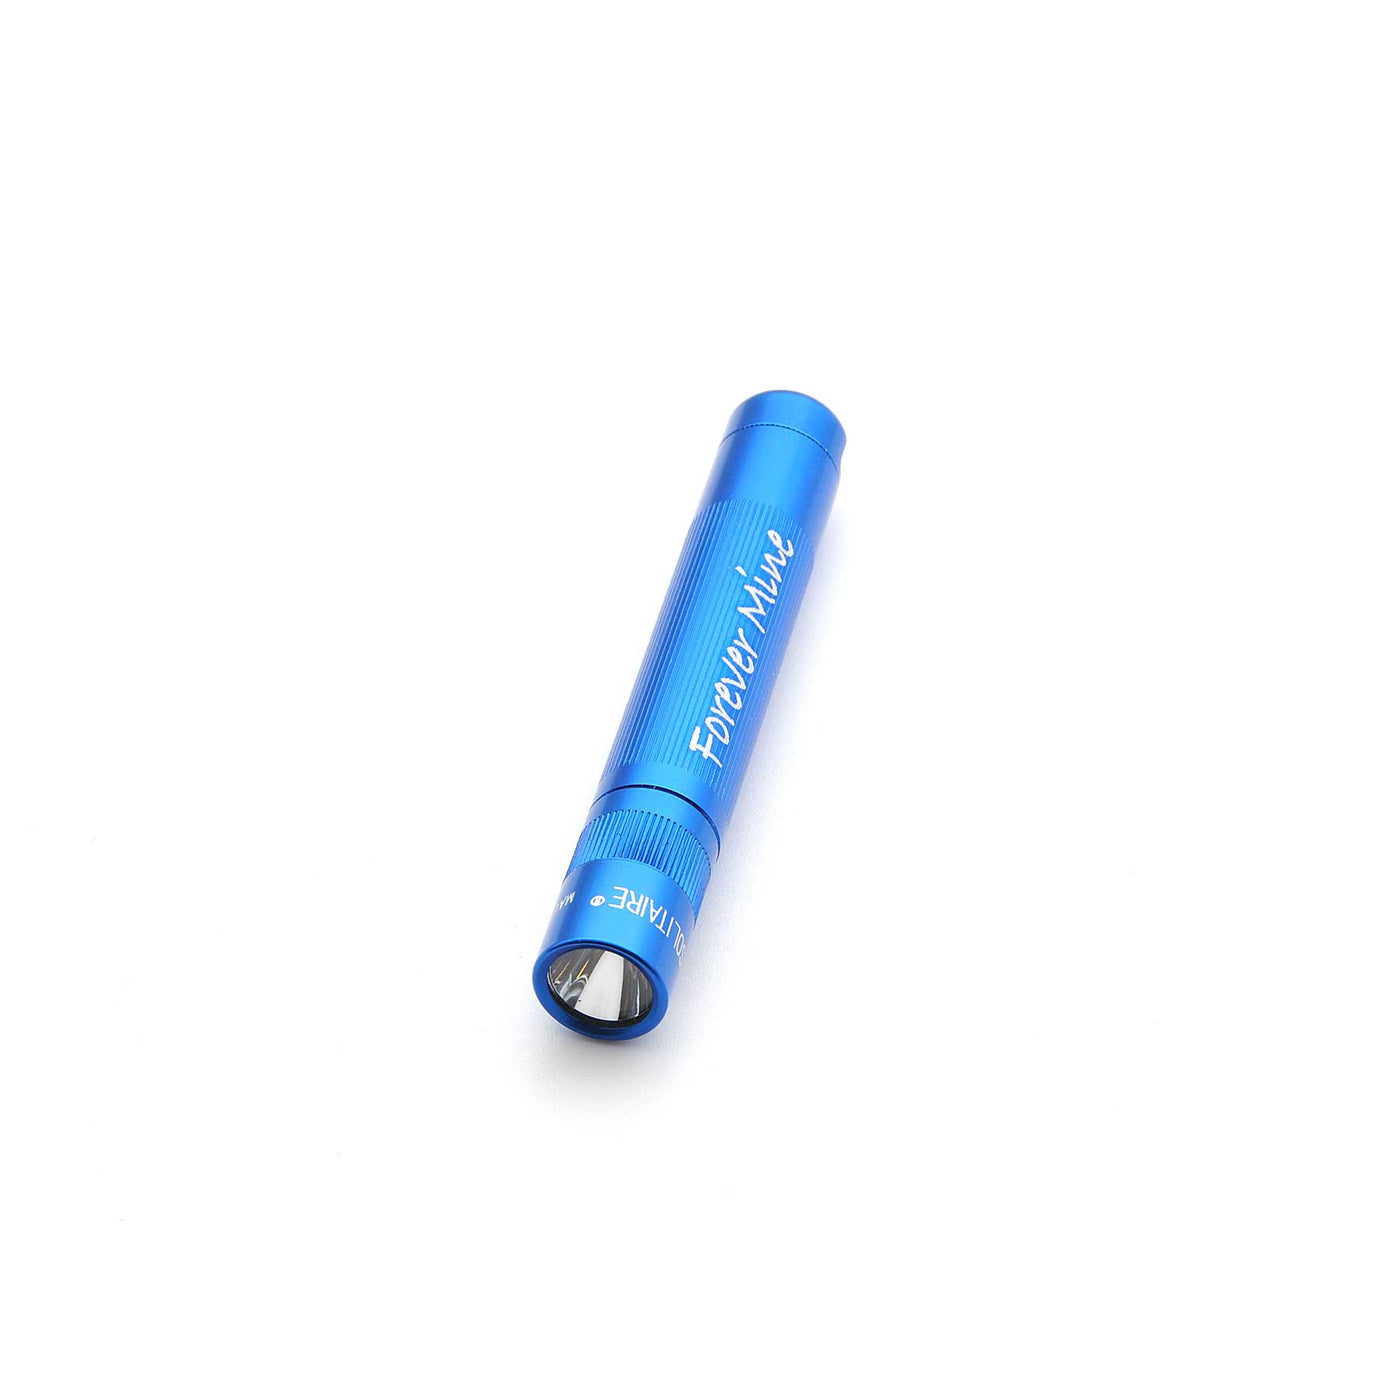 Maglite Solitaire LED - Forever Mine - Key Chain Flashlight Blue